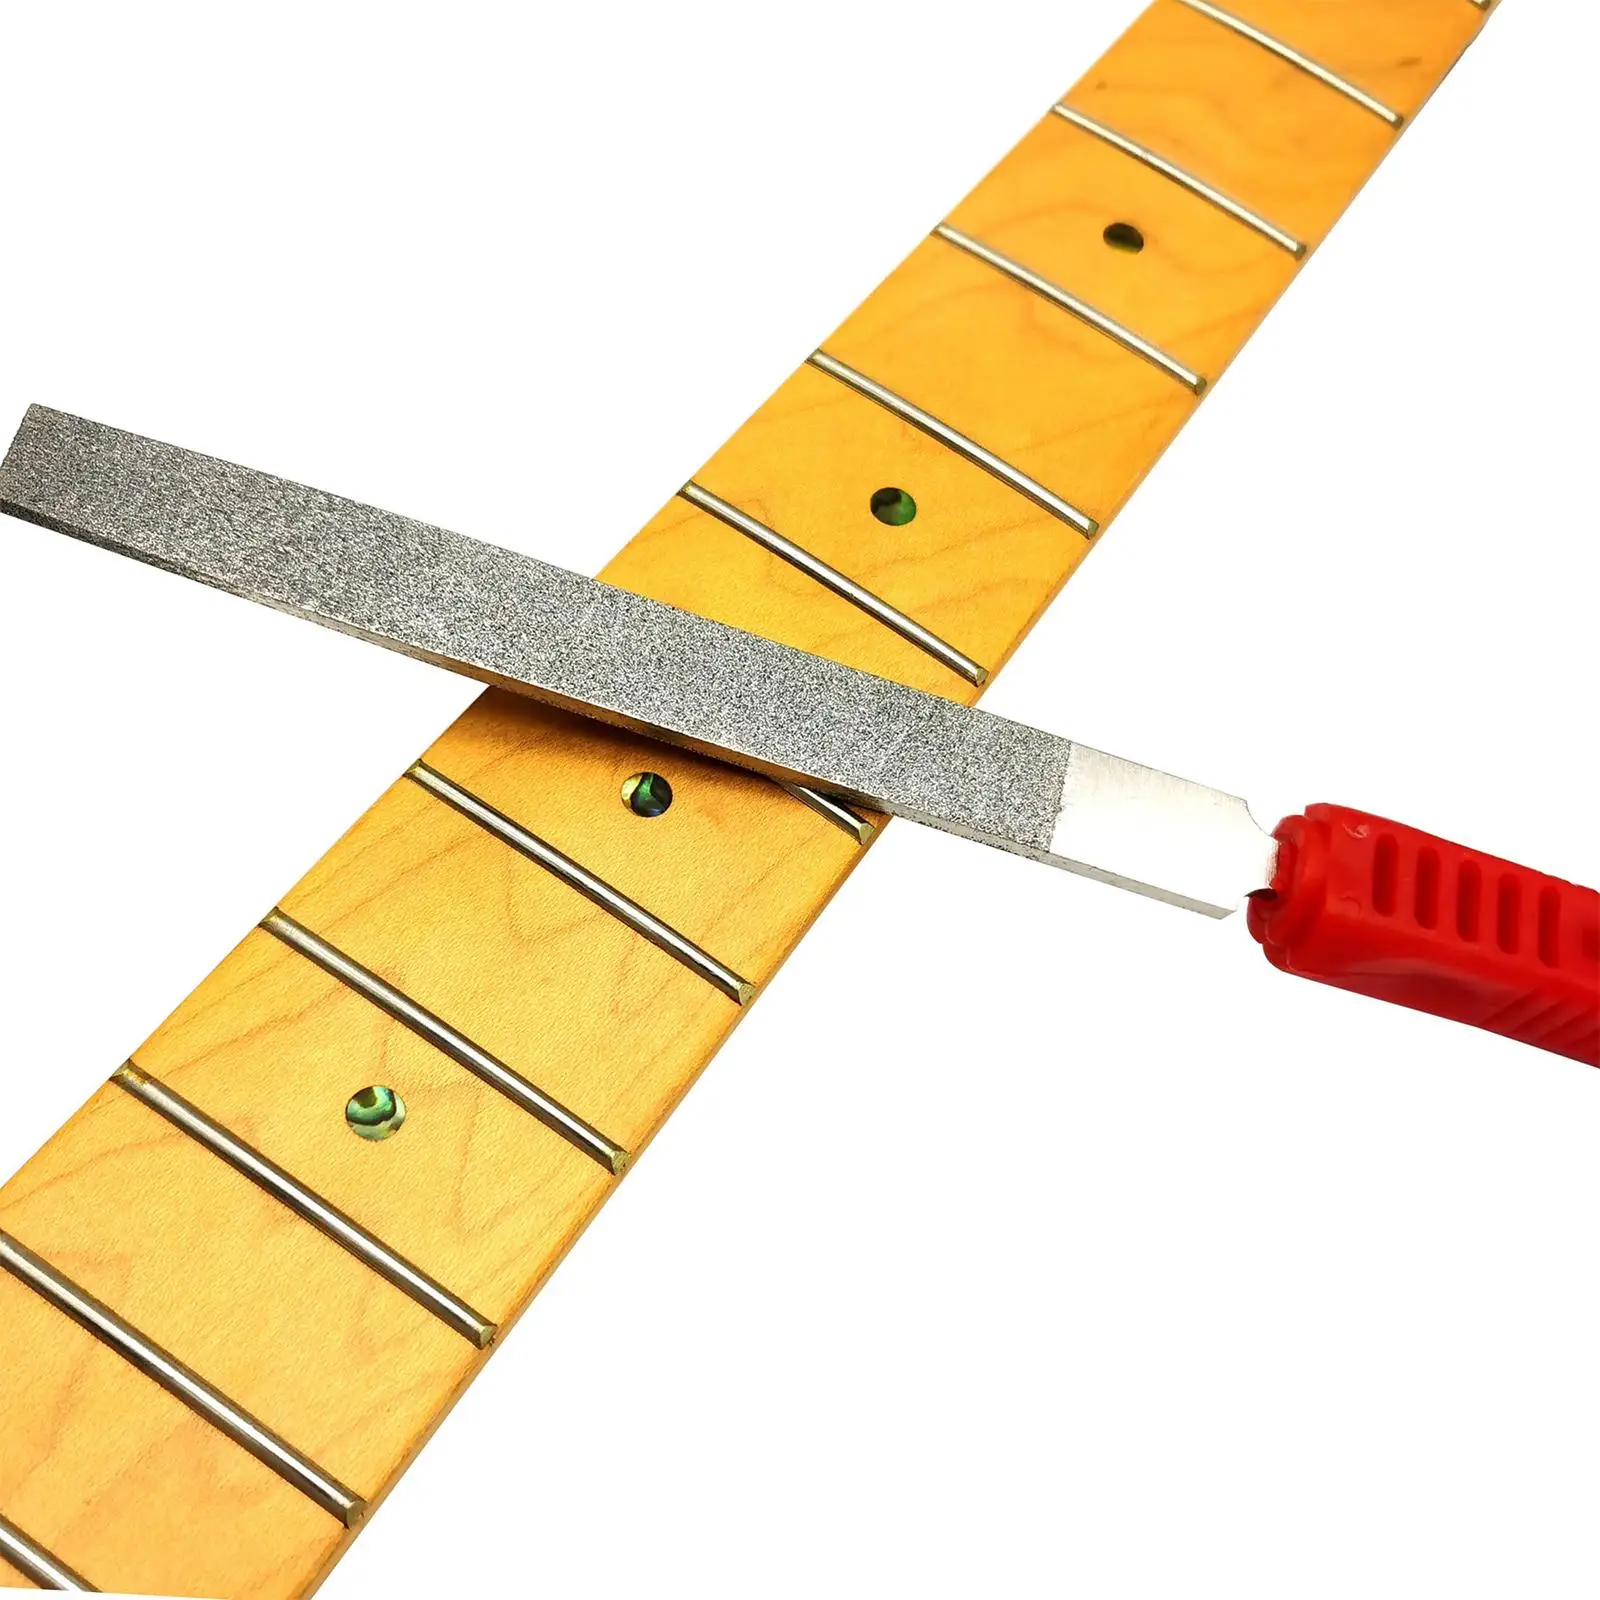 Professional Guitar Fret File Grinding Tool Kit Luthier Leveling Tool Guitar Frets Repair